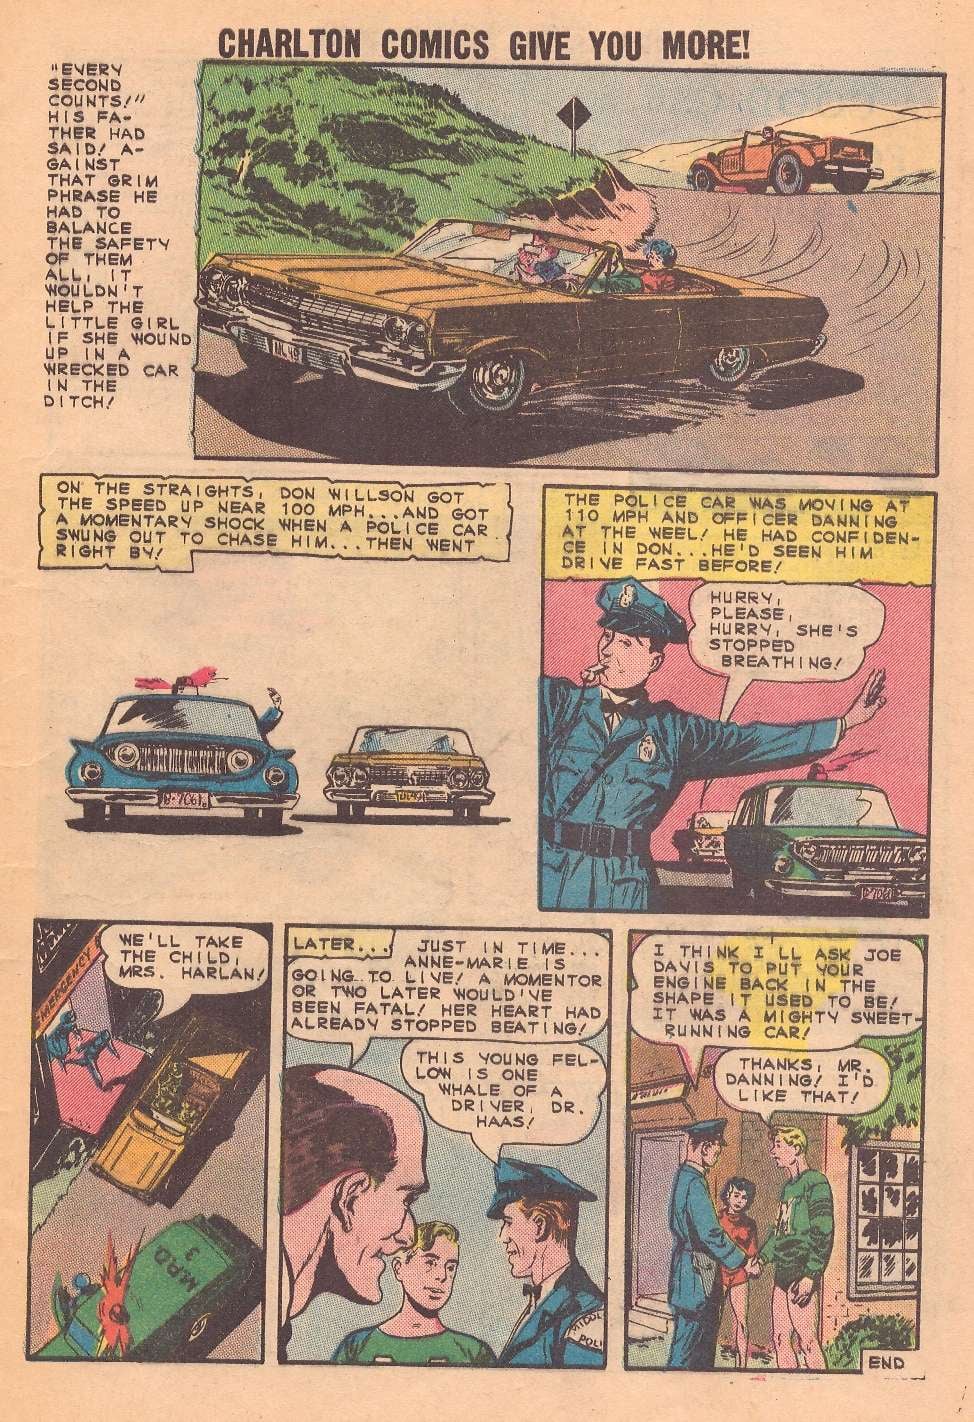 Drag-Strip Hotrodders - 60s Us Comics - January 1965 13239210